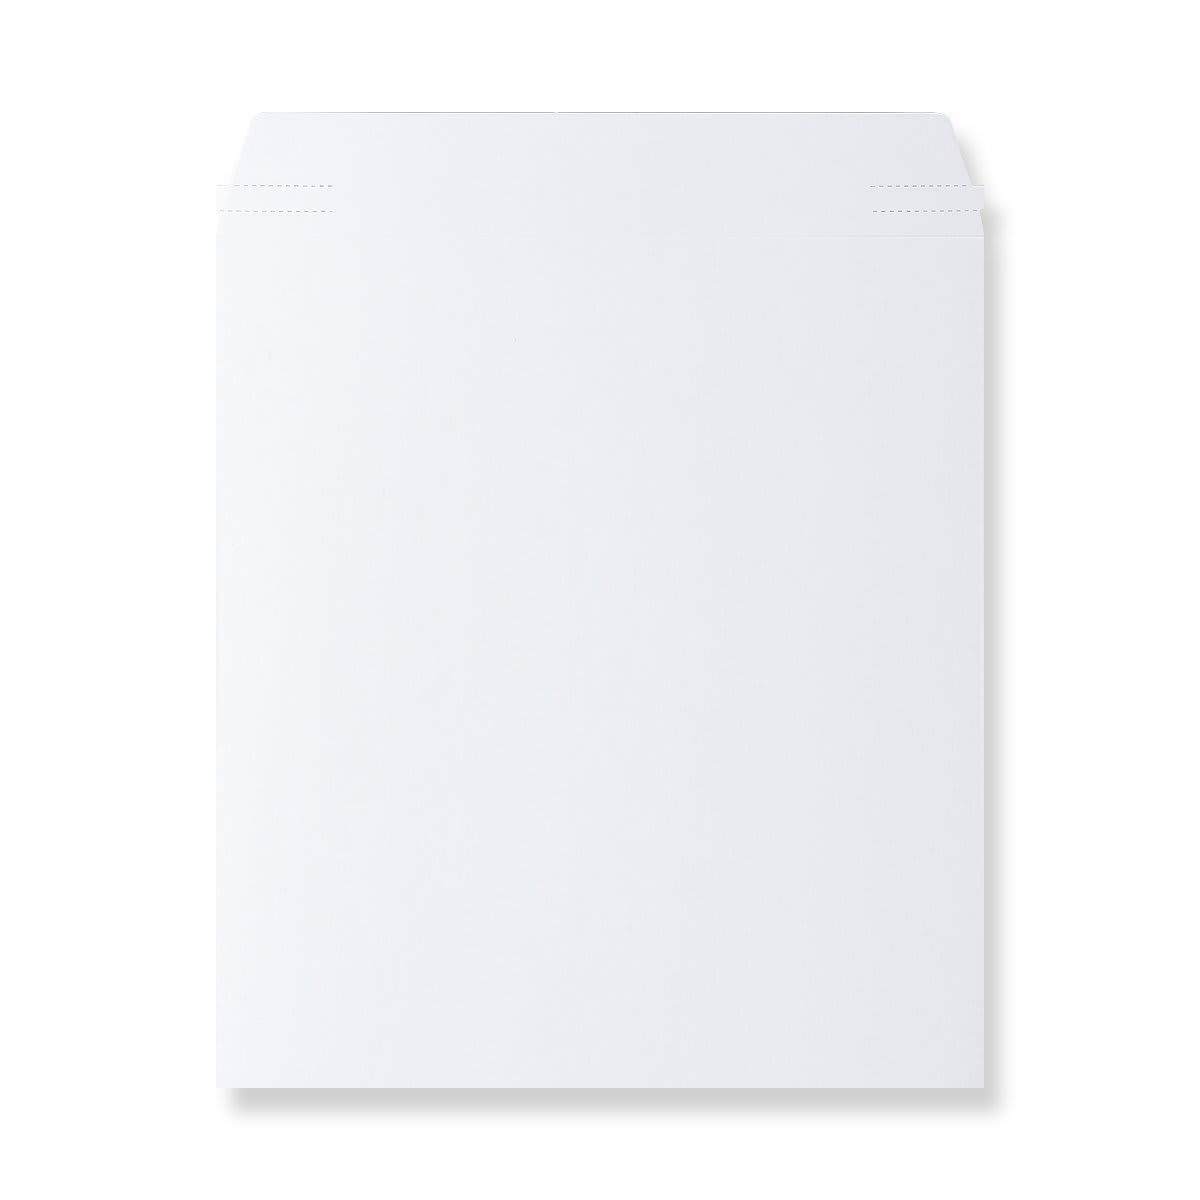 406x318mm White All Board Envelopes